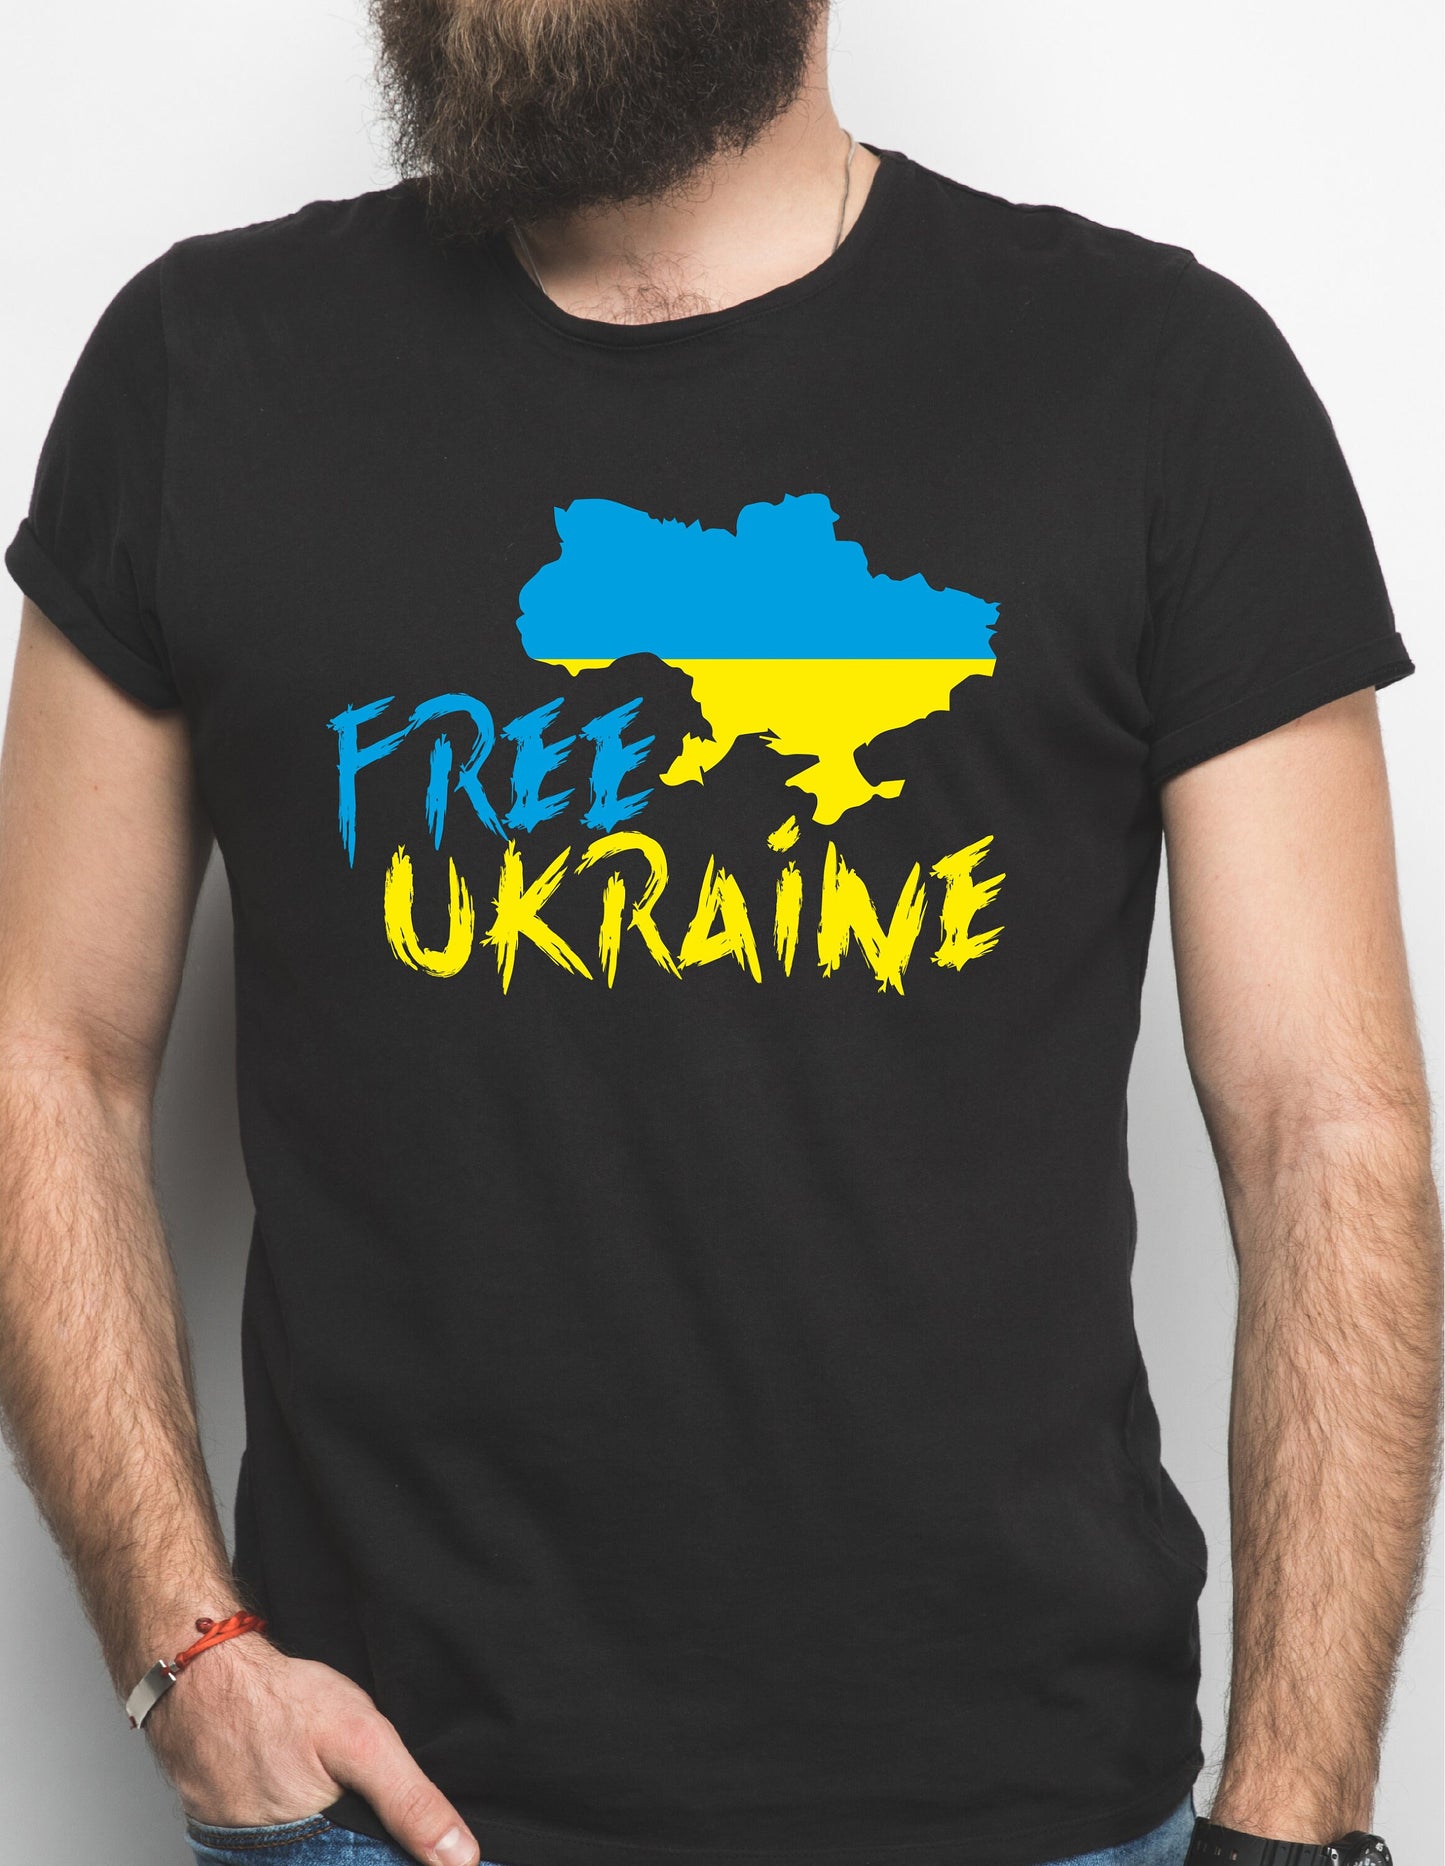 Free Ukraine T-Shirt D | Anti Putin Tee | Ukrainian flag | Protest Peace | F**k Putin | Fist | Charity tshirt